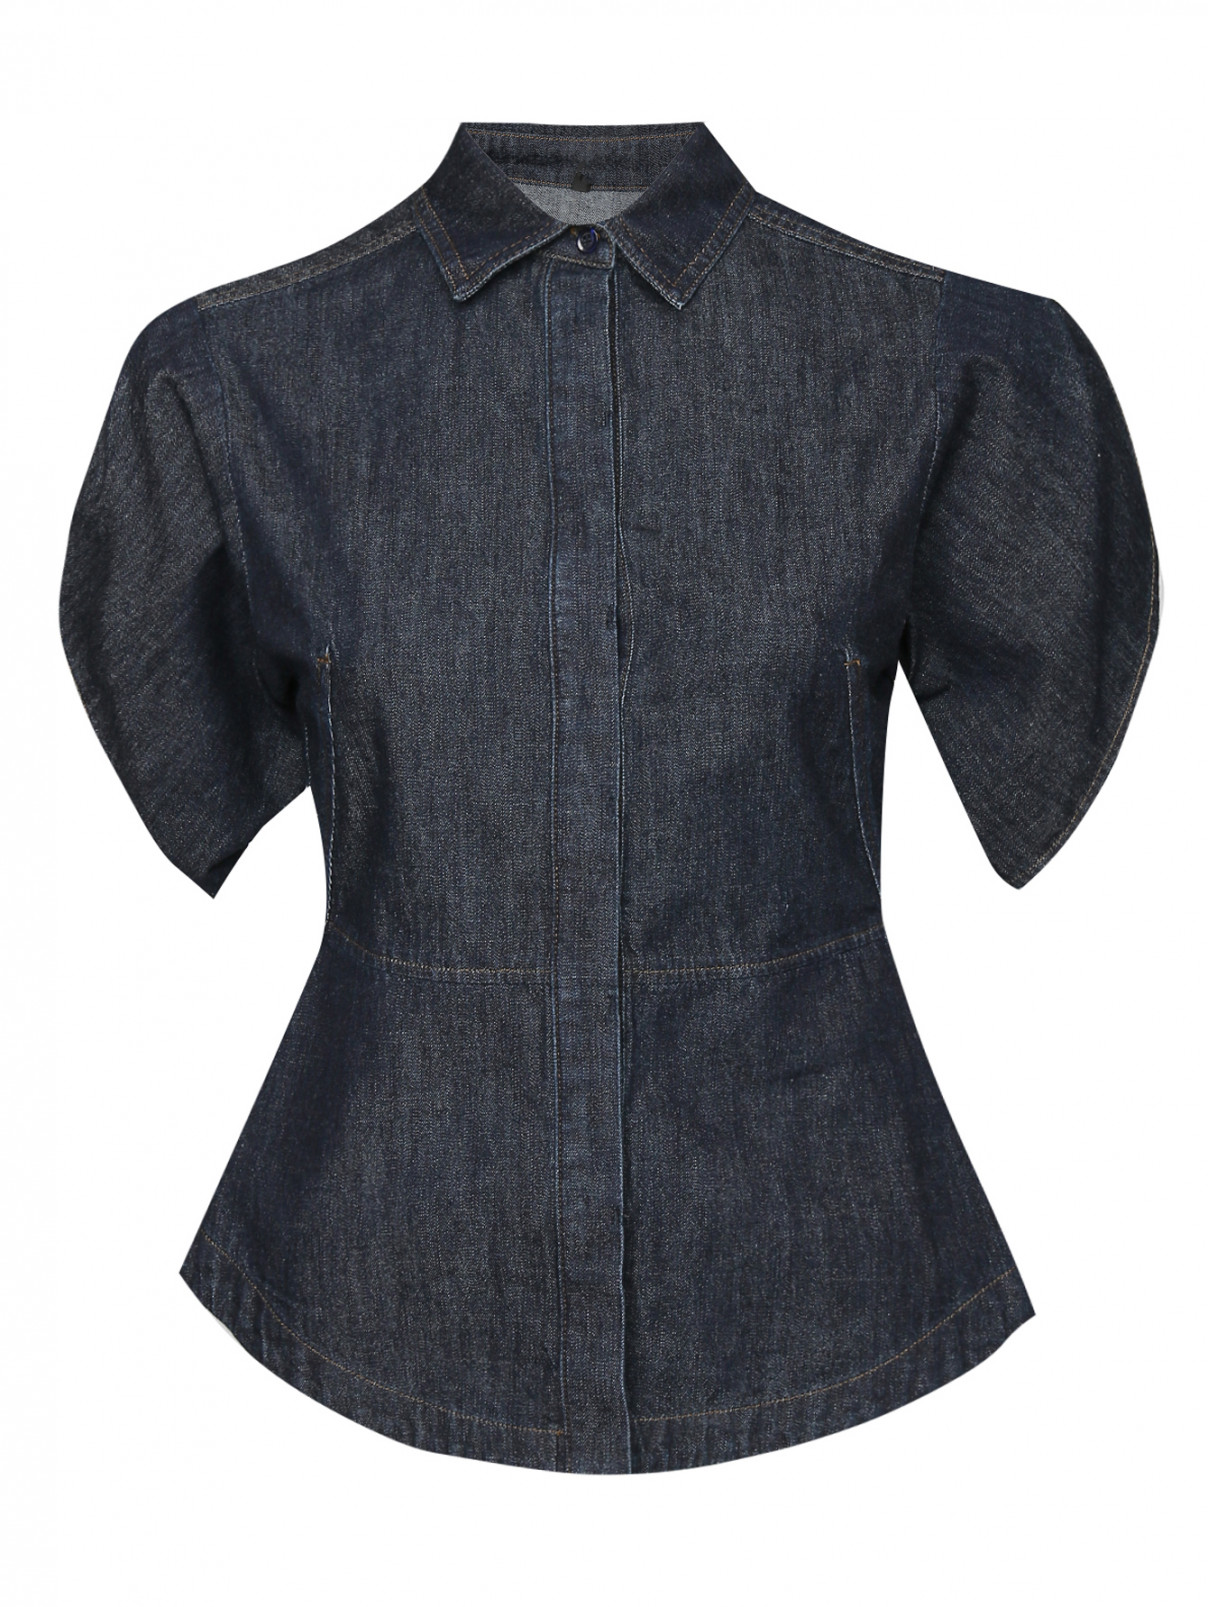 Джинсовая рубашка с коротким рукавом Sportmax  –  Общий вид  – Цвет:  Синий